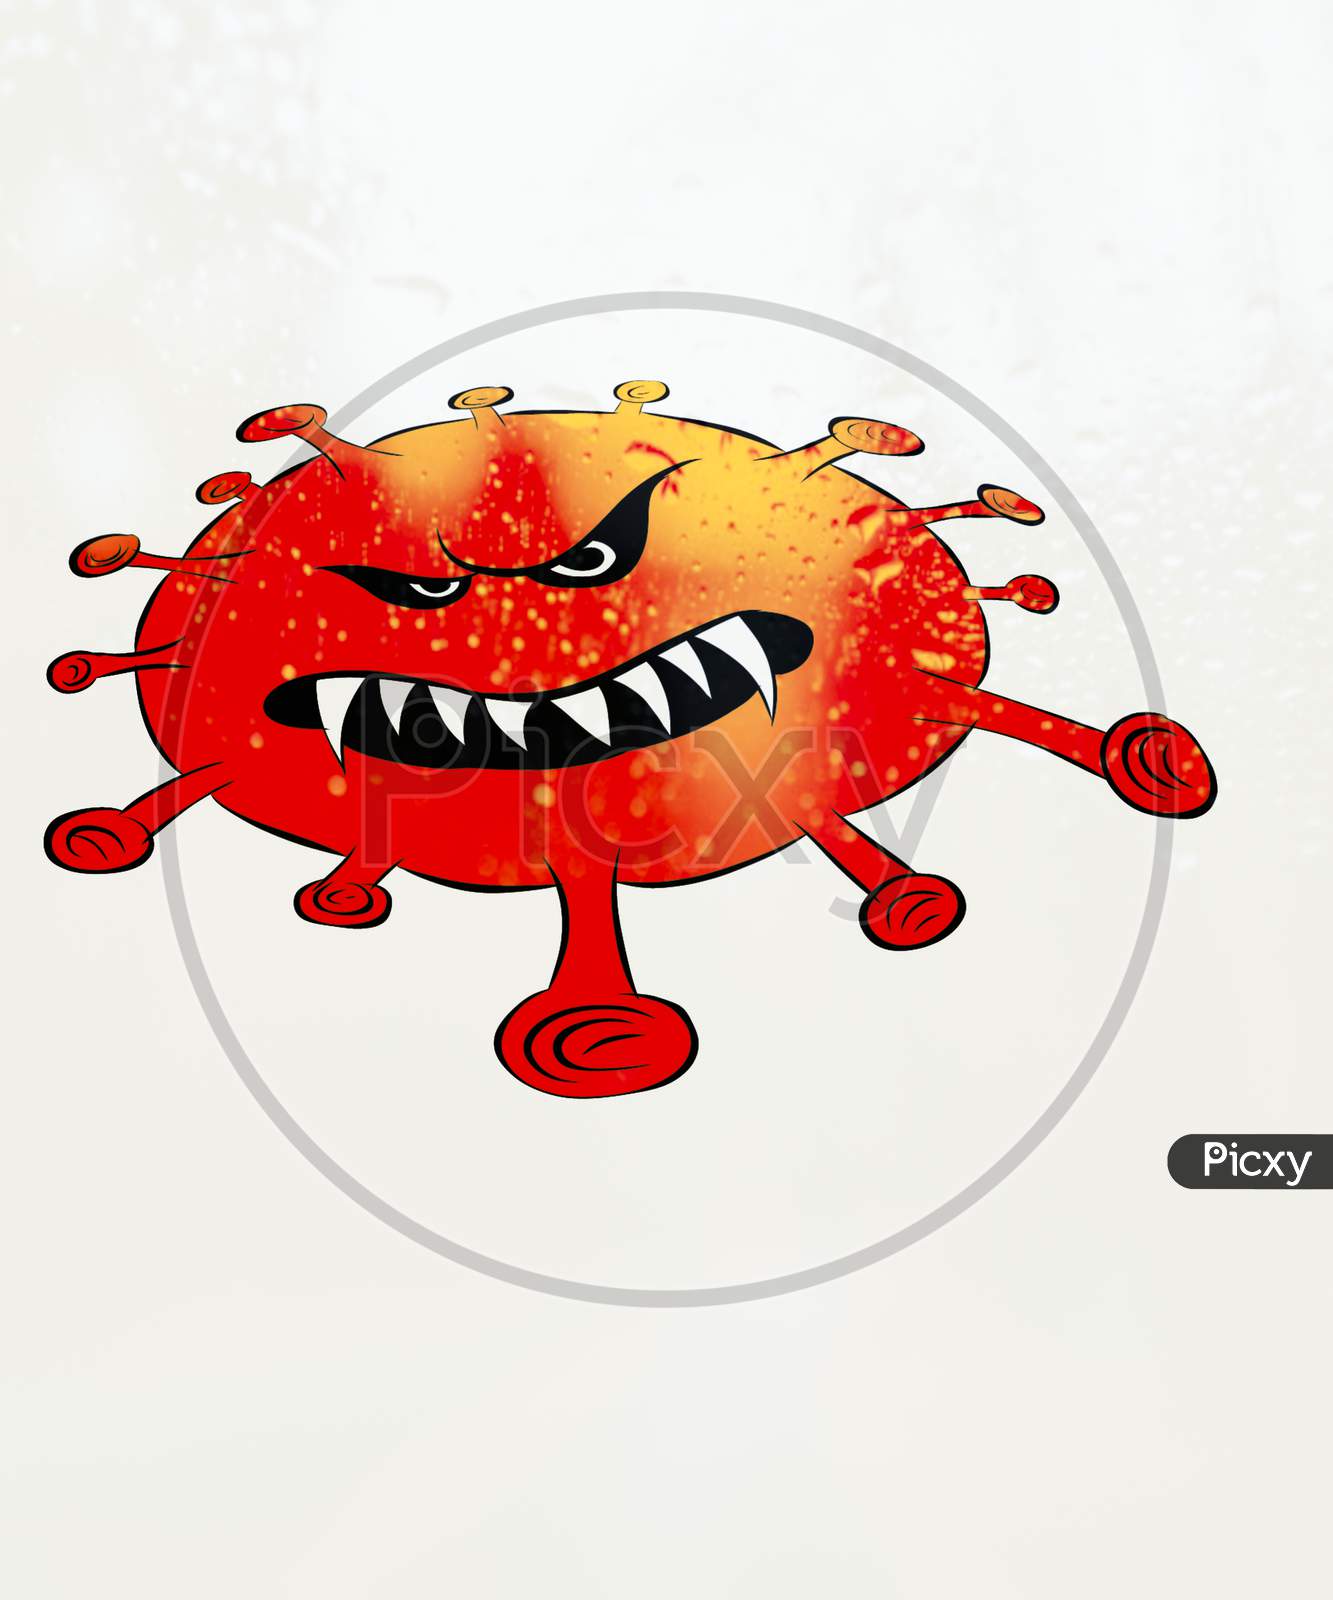 Corona virus in angry